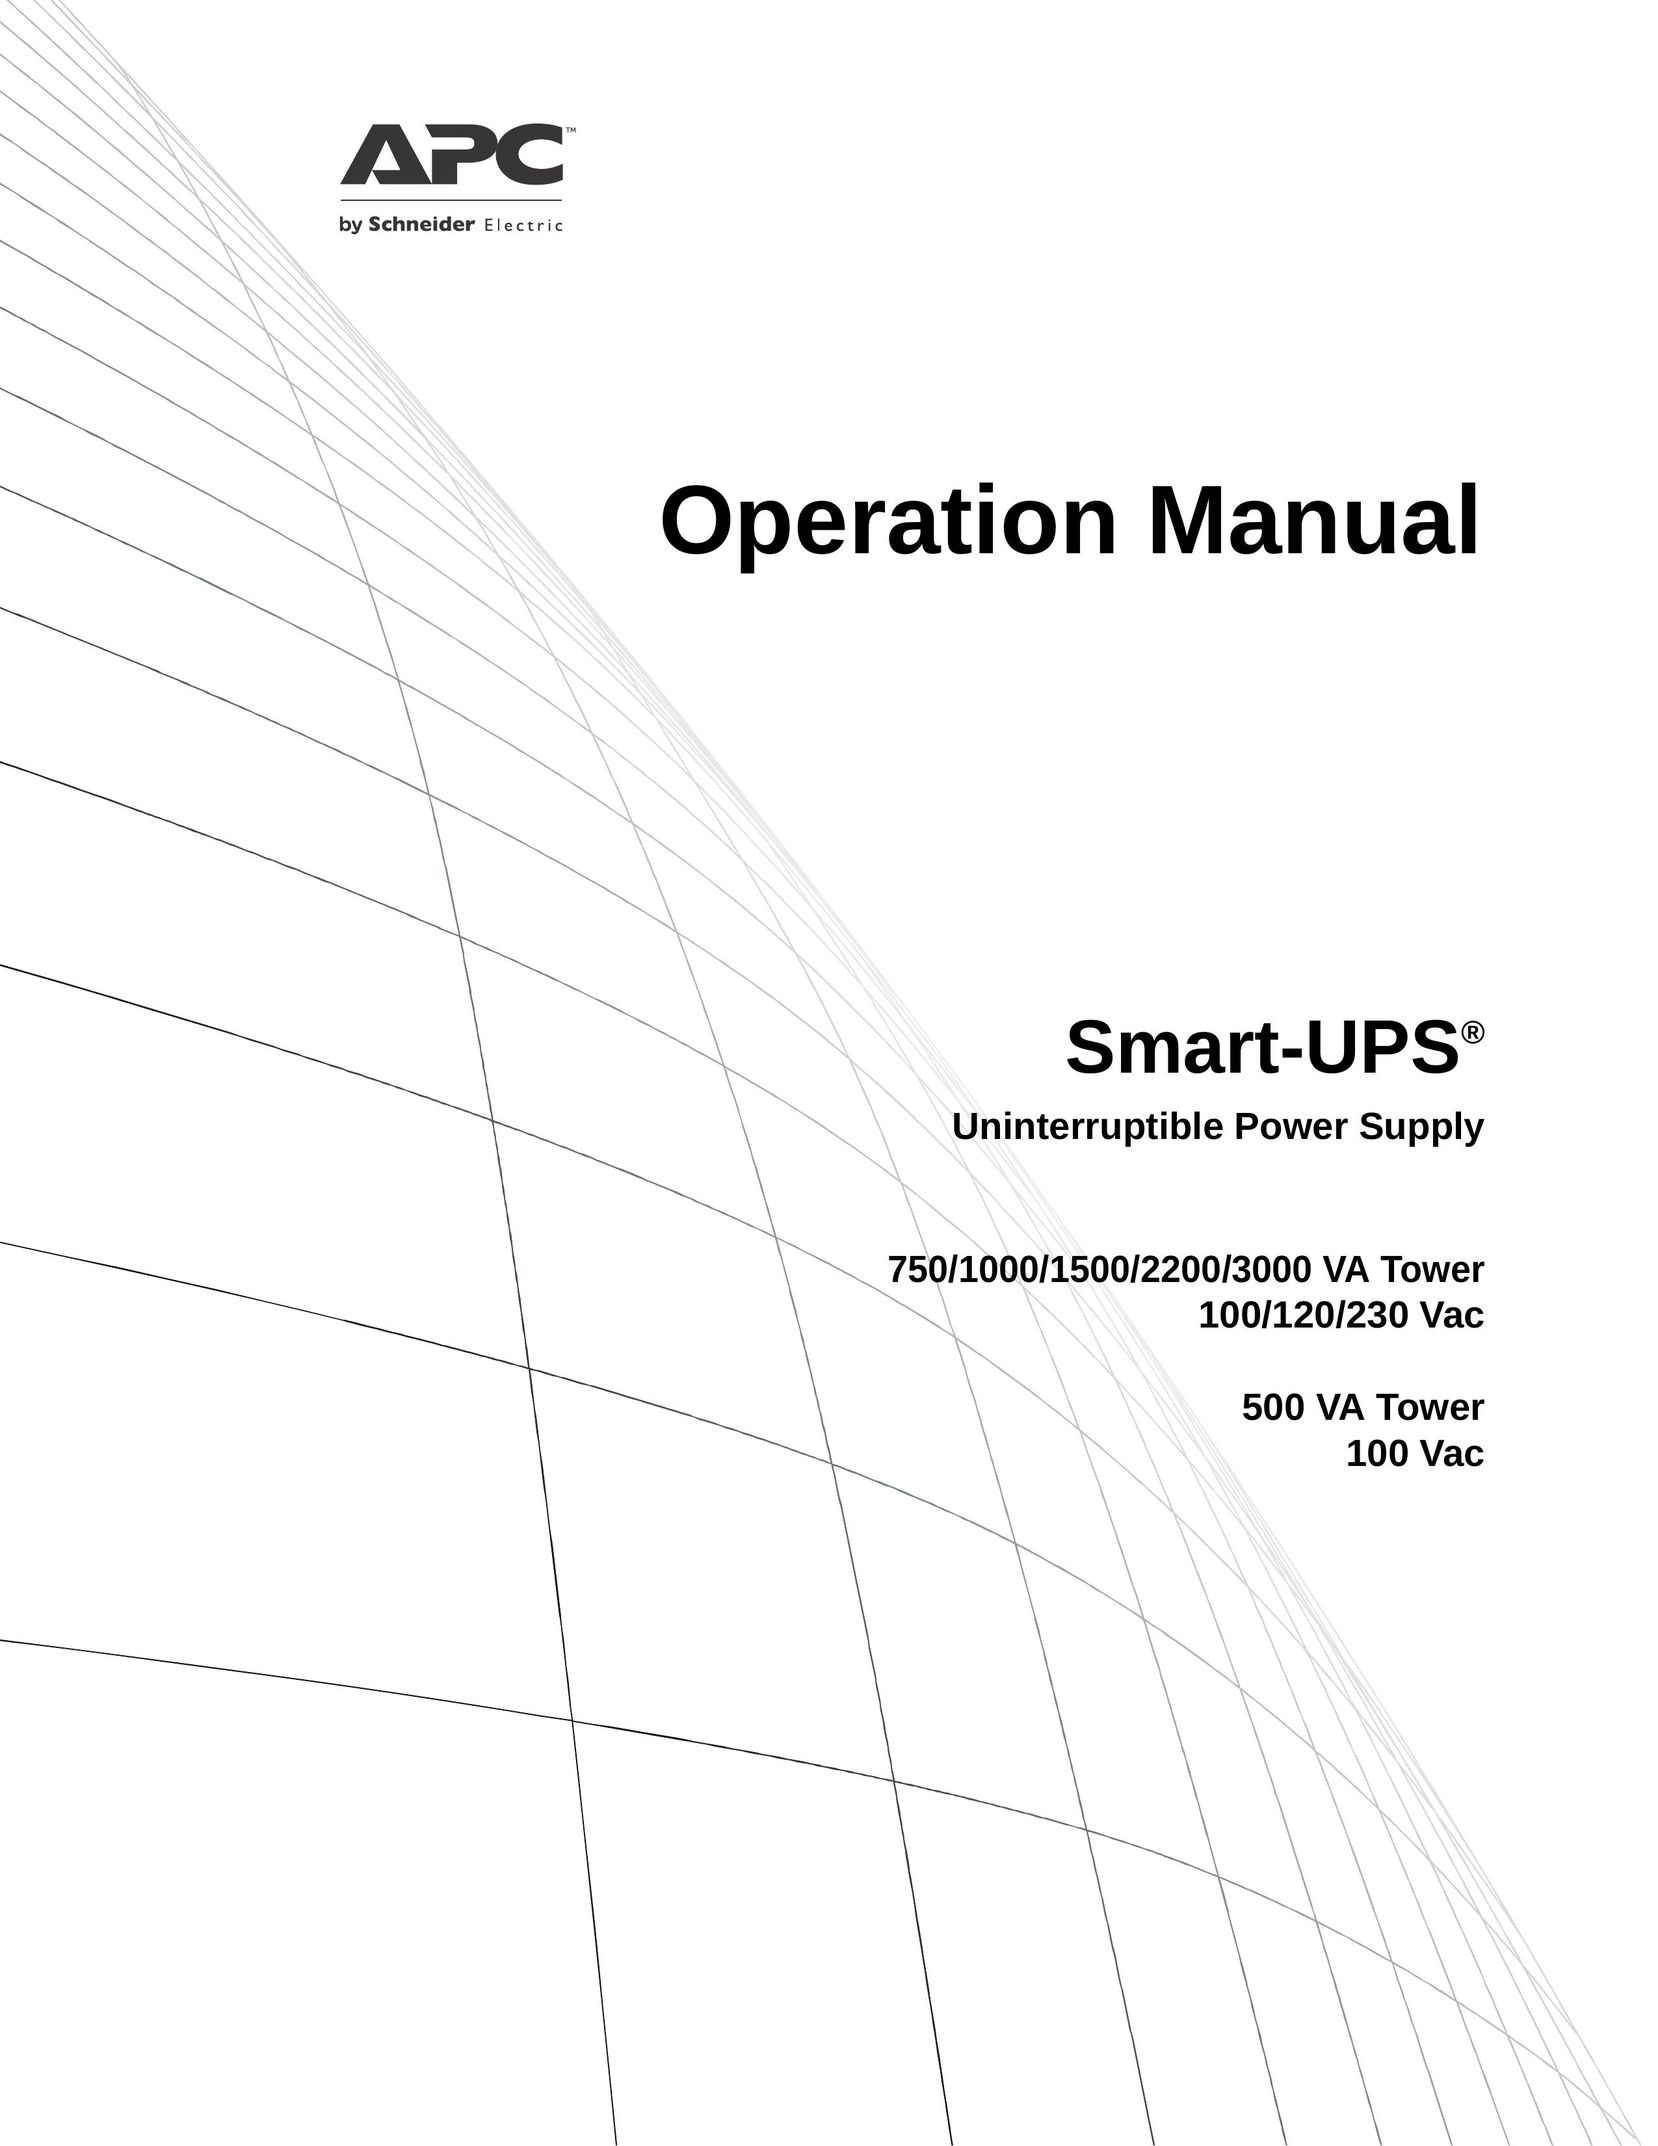 APC 1000/ VA Power Supply User Manual